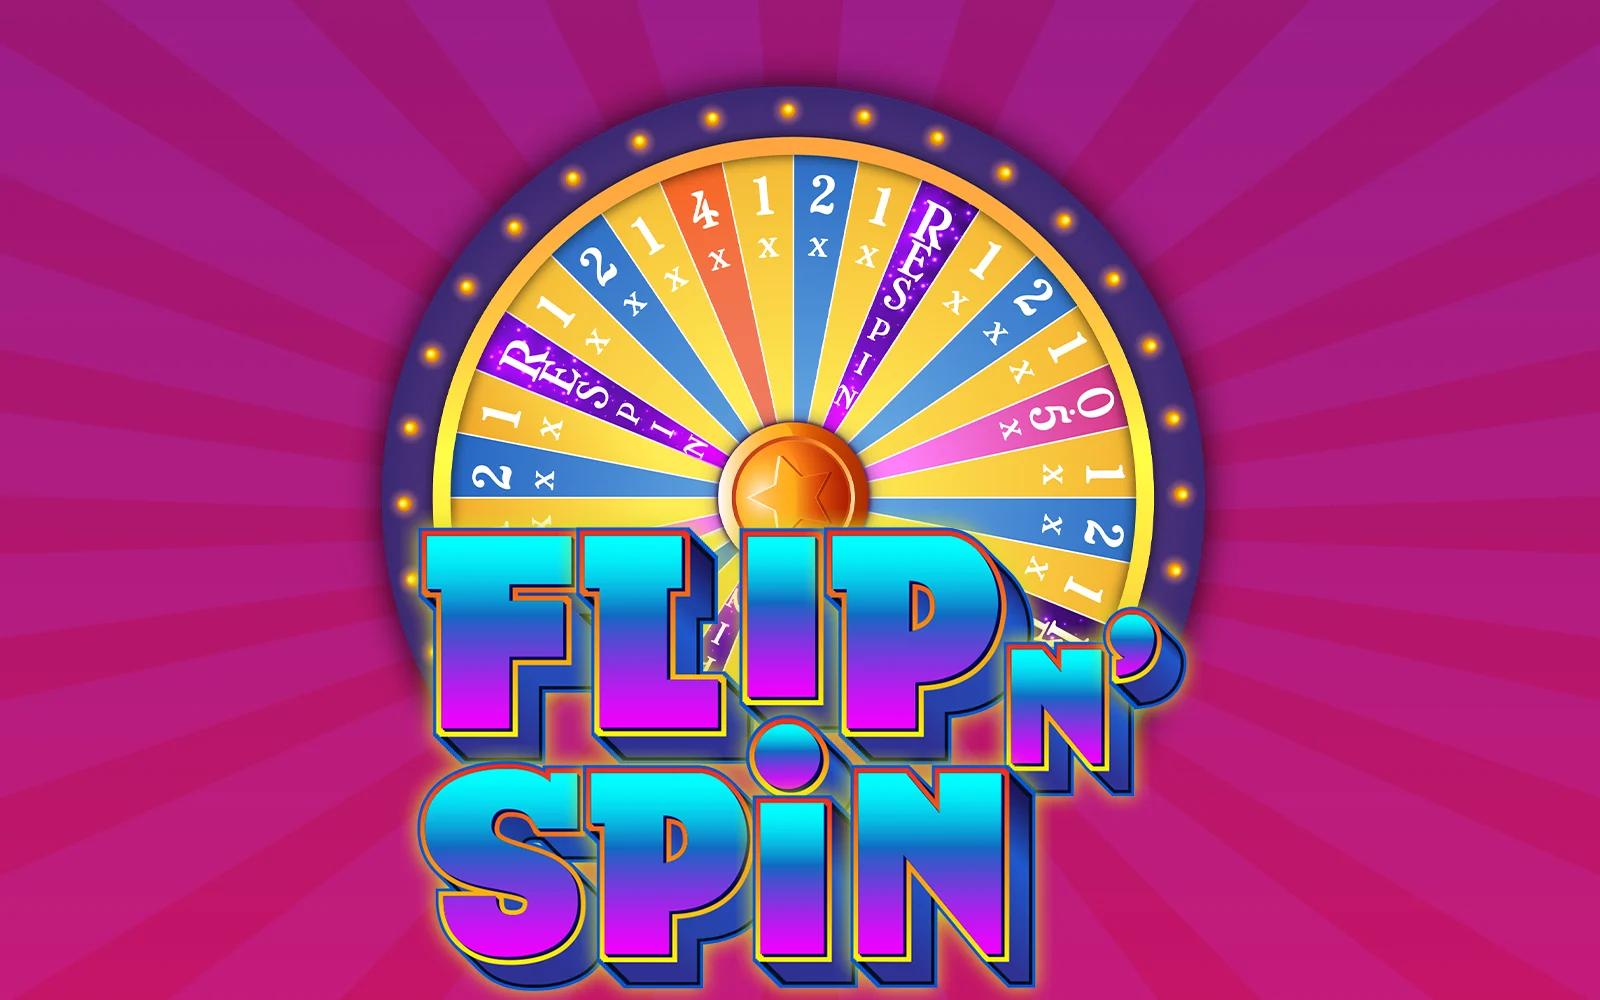 Gioca a Flip ‘n Spin sul casino online Starcasino.be